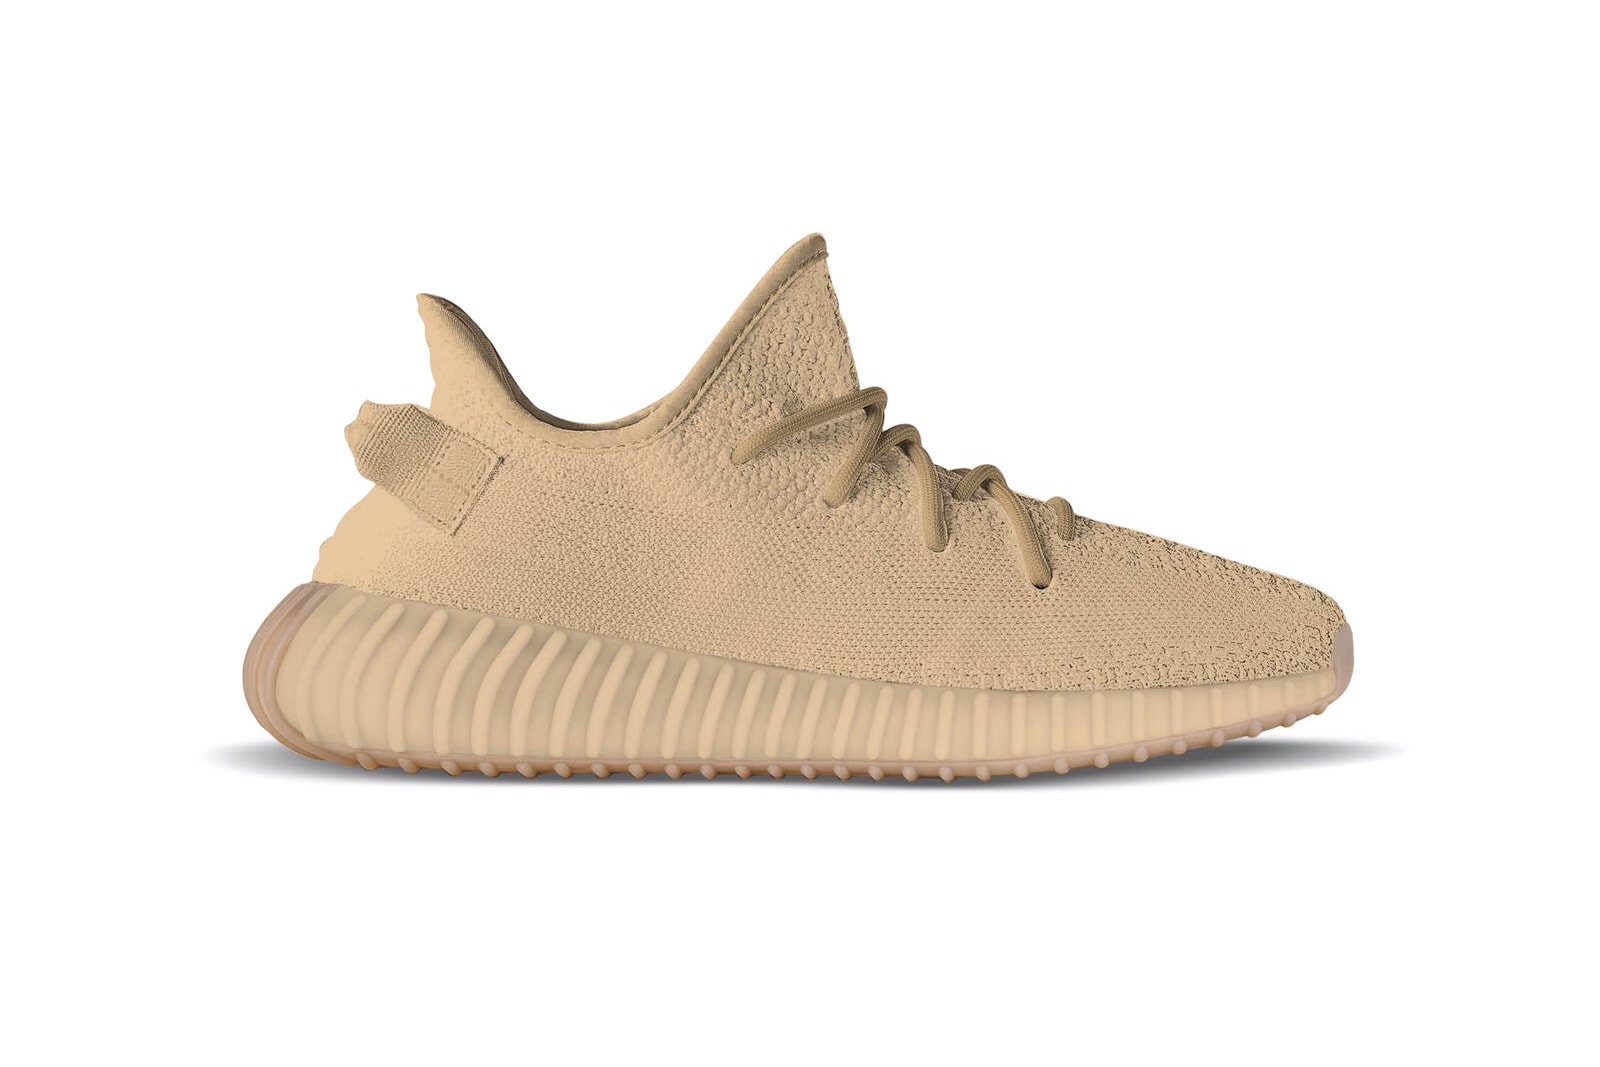 Kanye West adidas Originals YEEZY BOOST 350 V2 Peanut Butter Leak 2018 June Release Date Info Sneakers Shoes Footwear